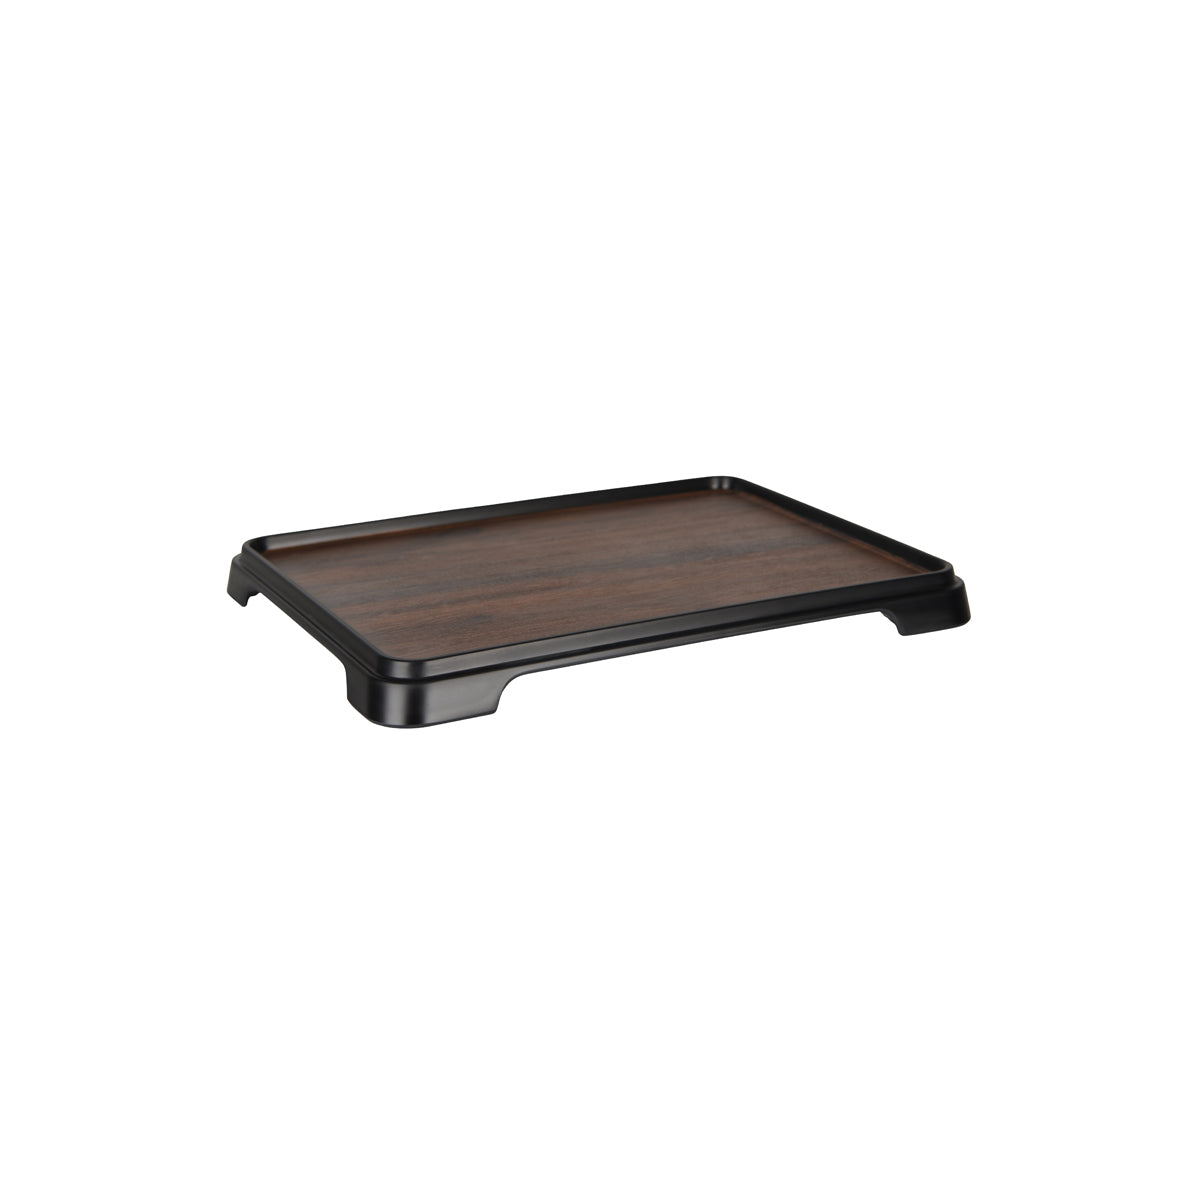 46393 Zicco Zicco Bento Box Walnut / Black Inroom Tray Riser Tomkin Australia Hospitality Supplies